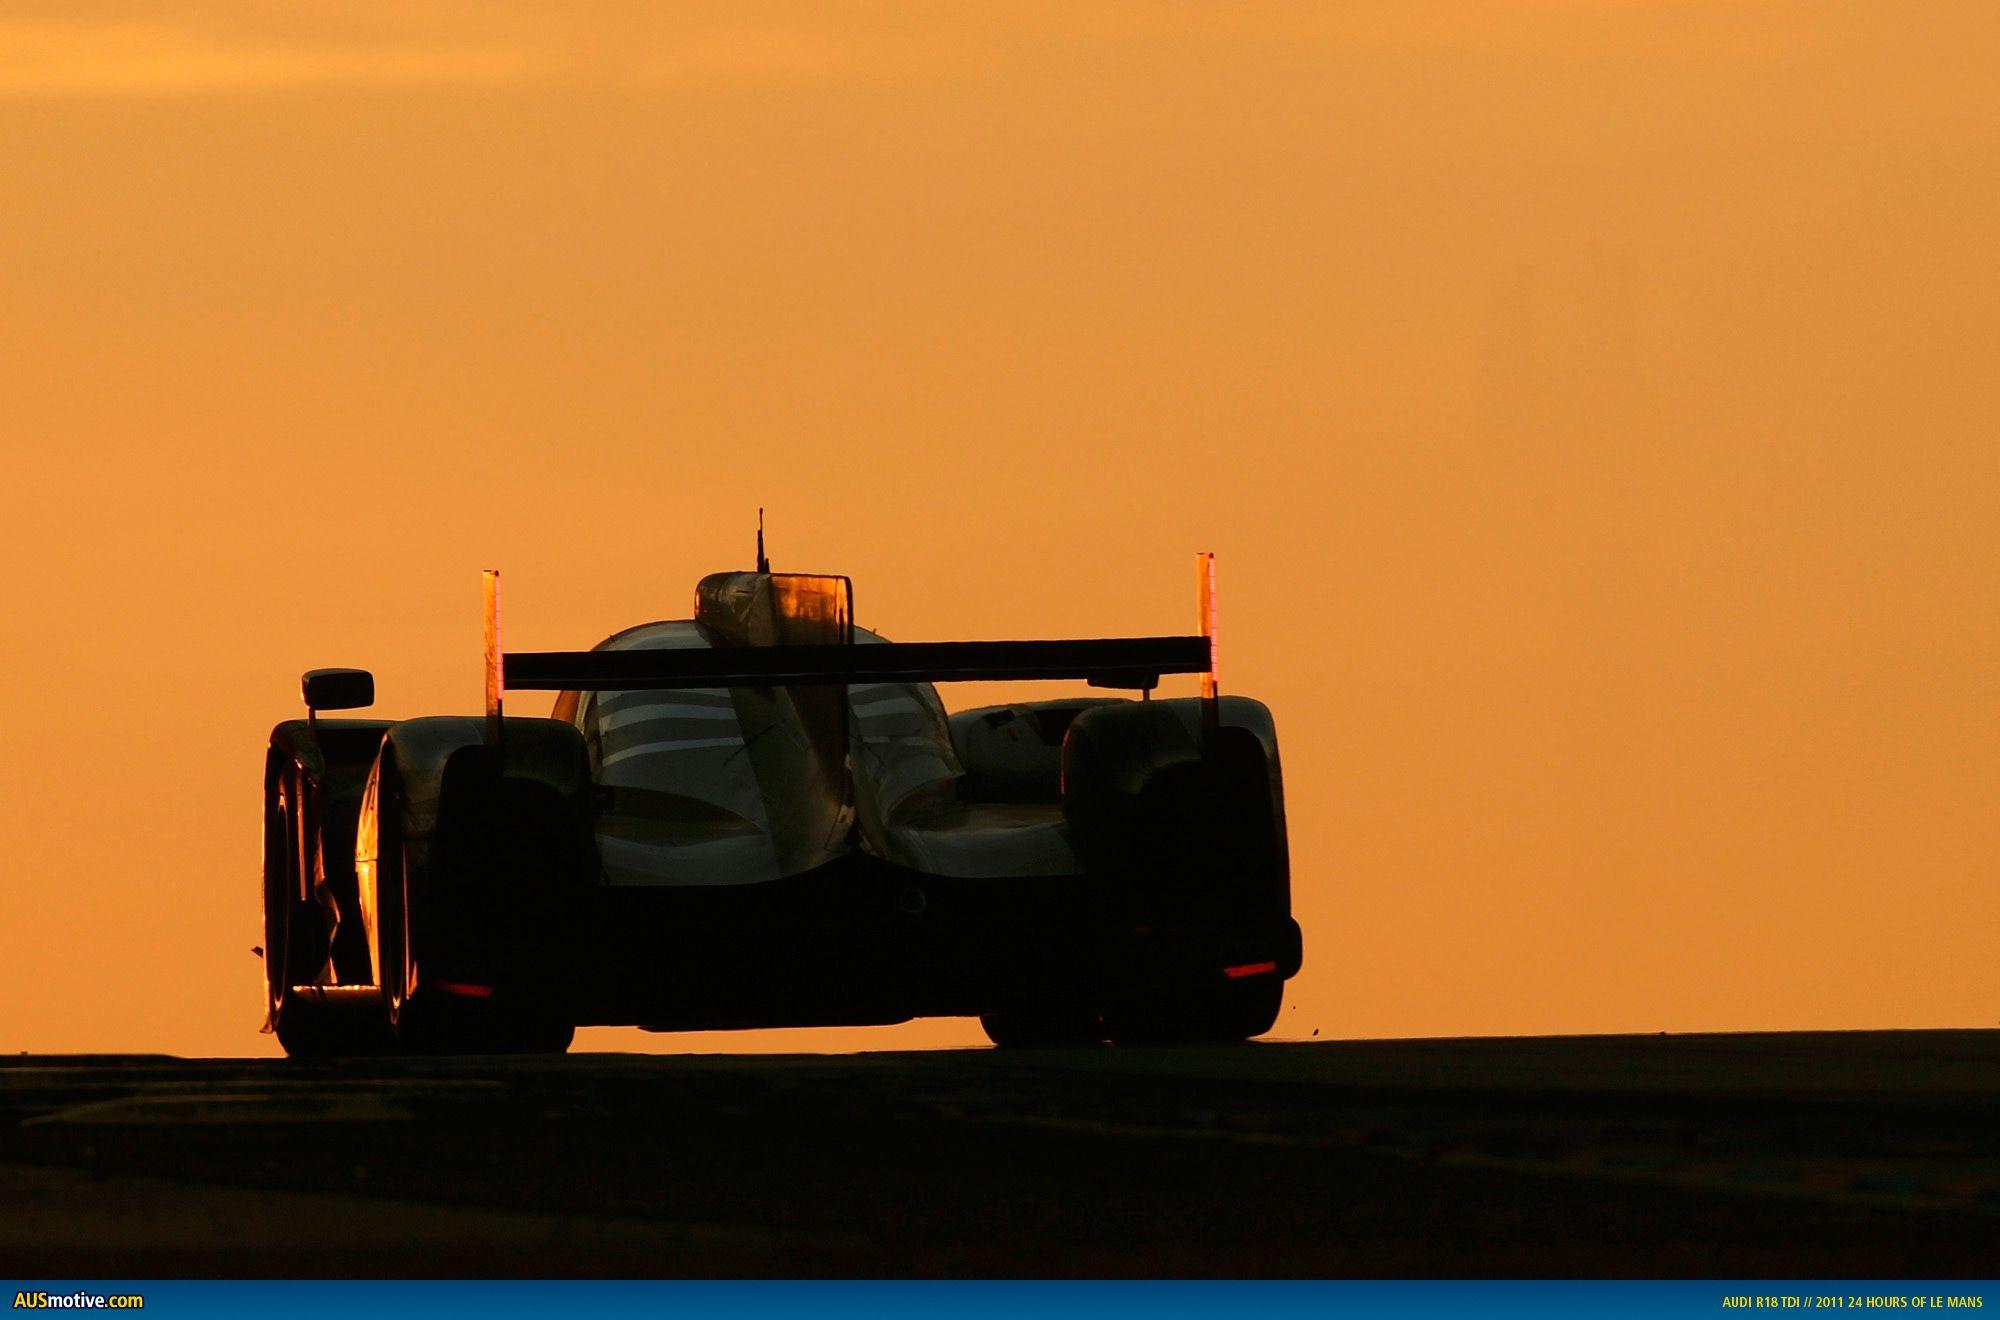 AUSmotive.com Reliving Audi's 10th 24 Hours of Le Mans victory